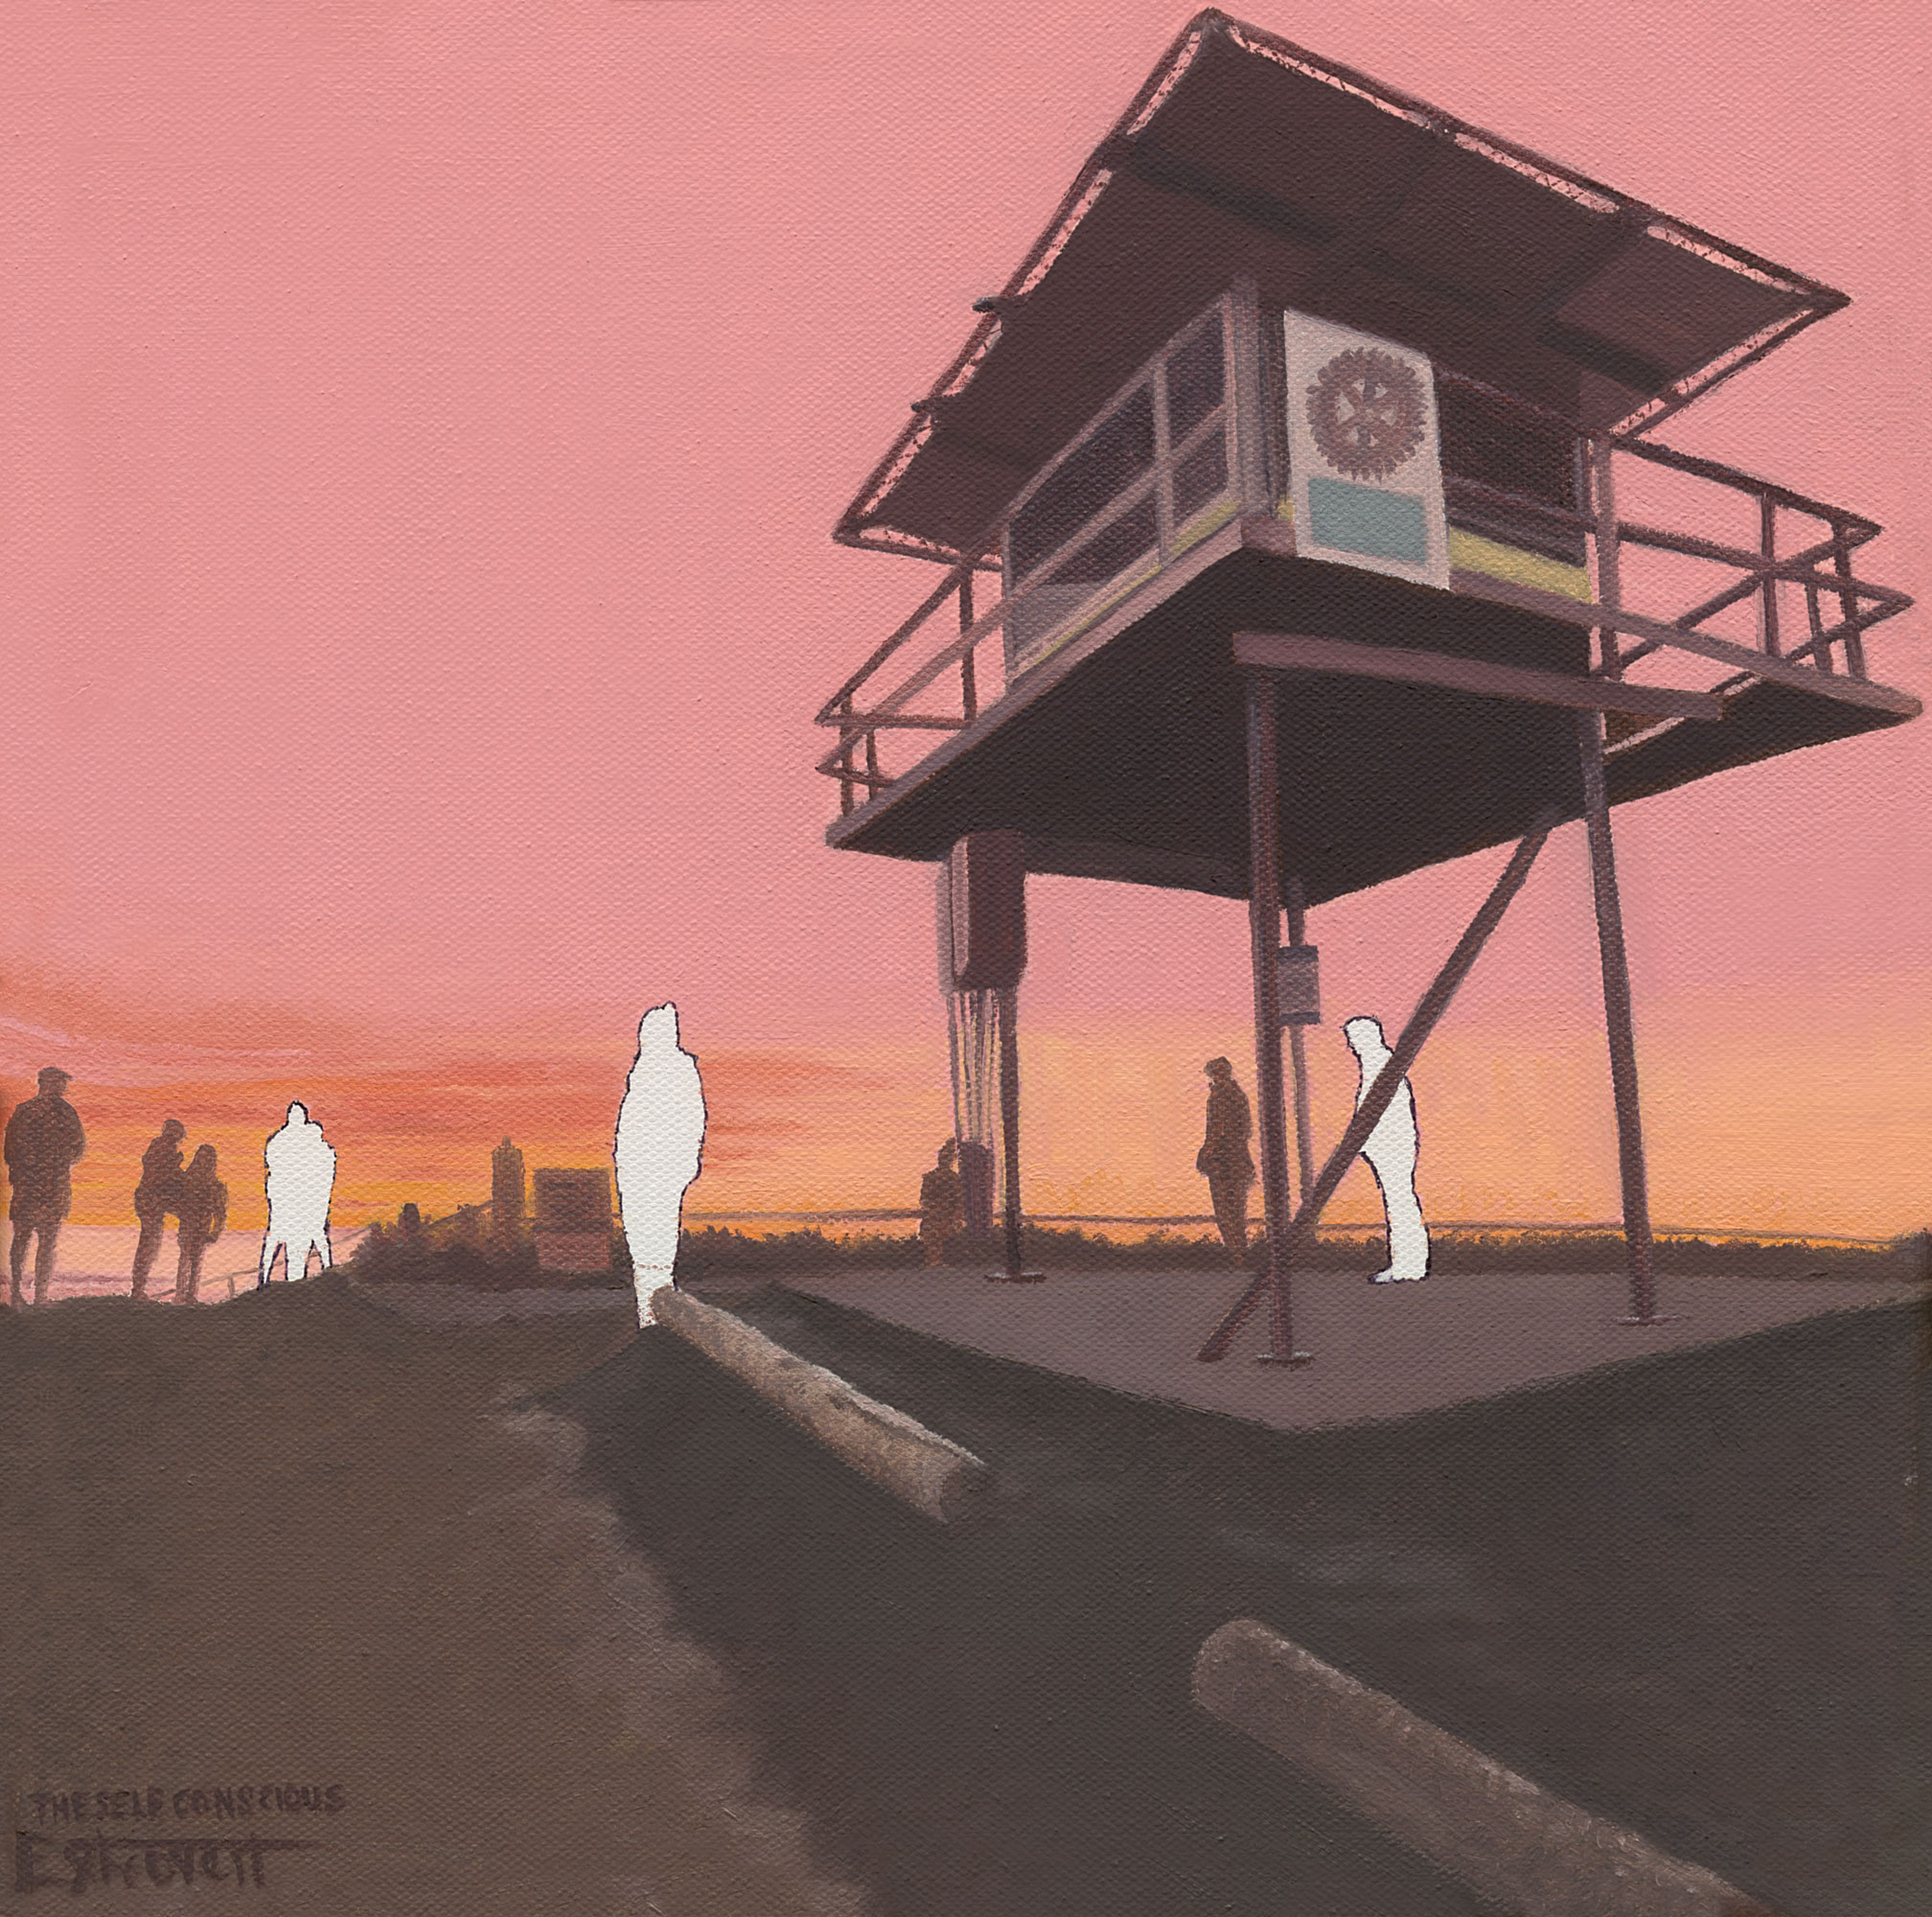 Elysian Sunrise by Jayne Curle | Lethbridge Landscape Prize 2022 Finalists | Lethbridge Gallery